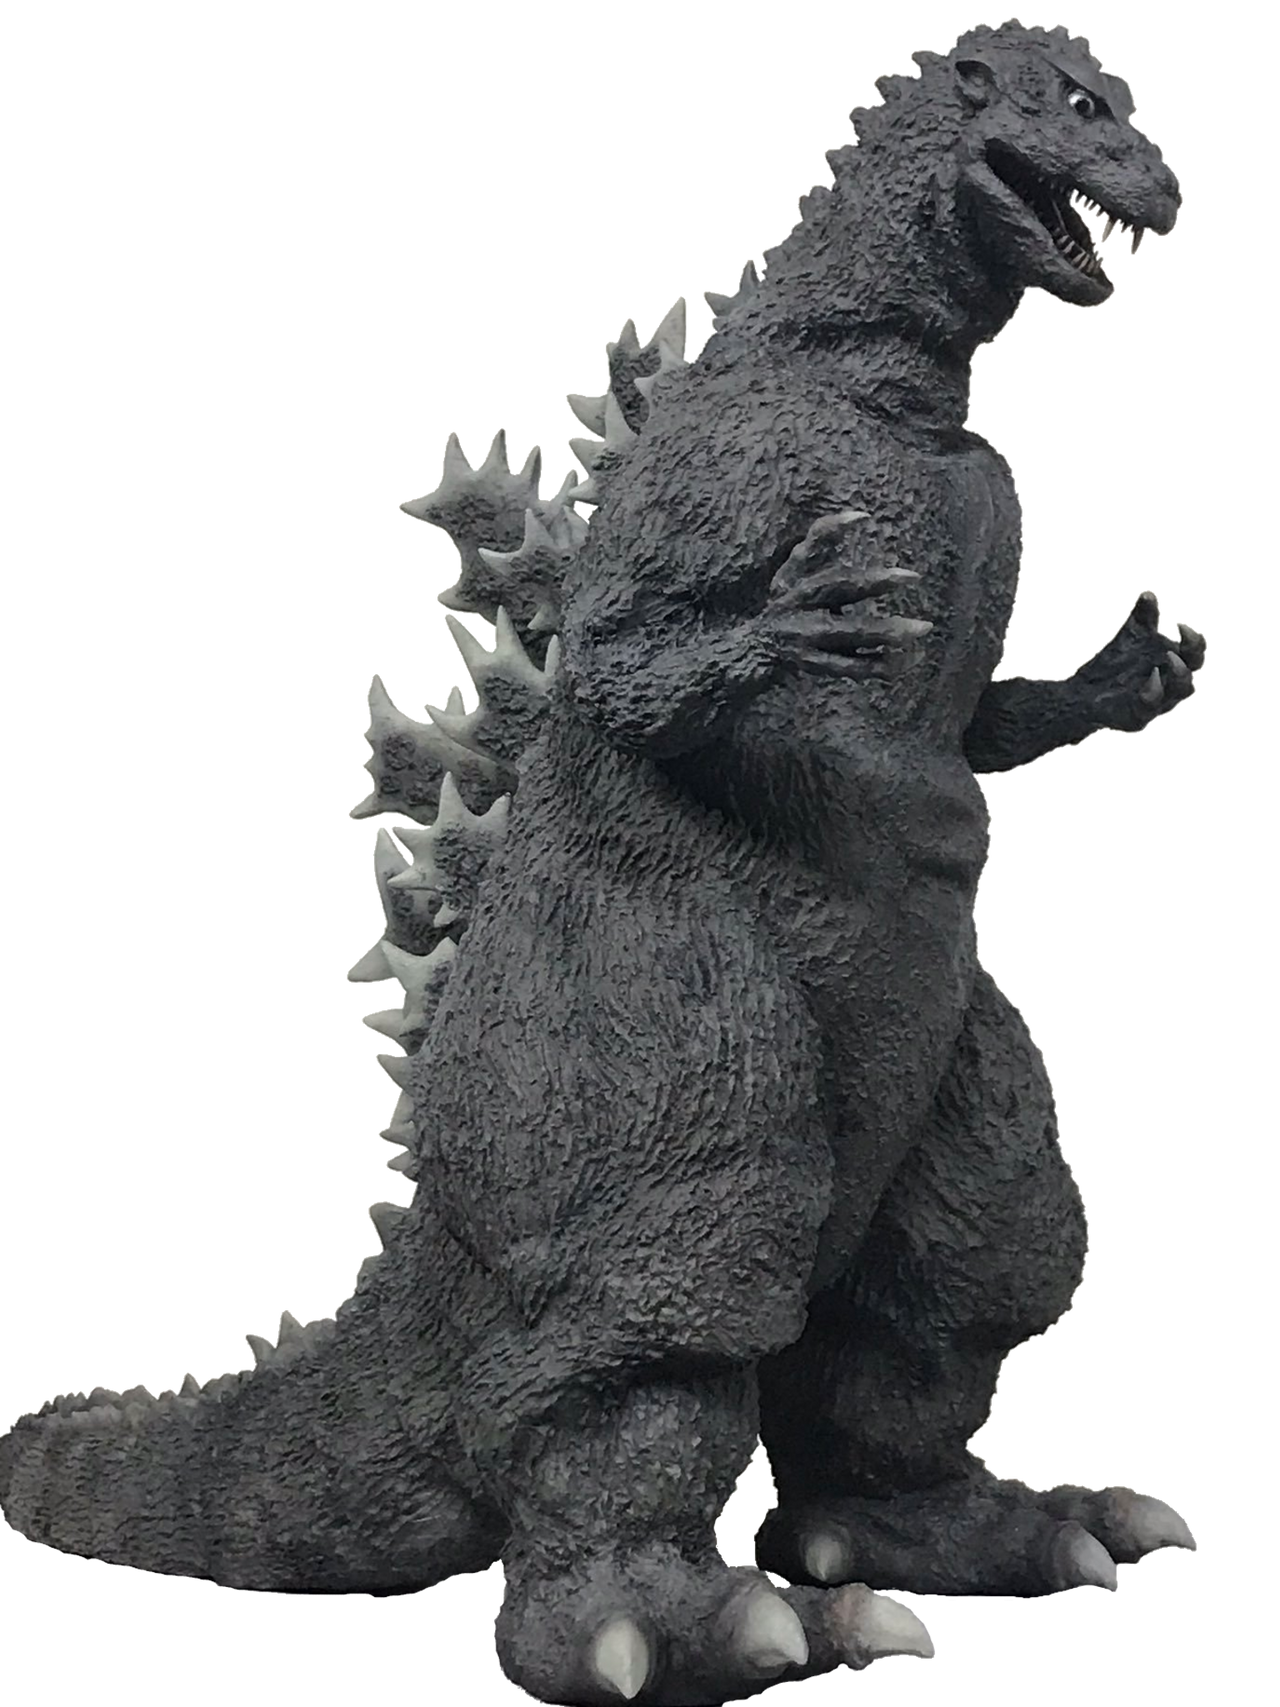 Golden Godzilla Earth Transparent Ver 2 by Lincolnlover1865 on DeviantArt